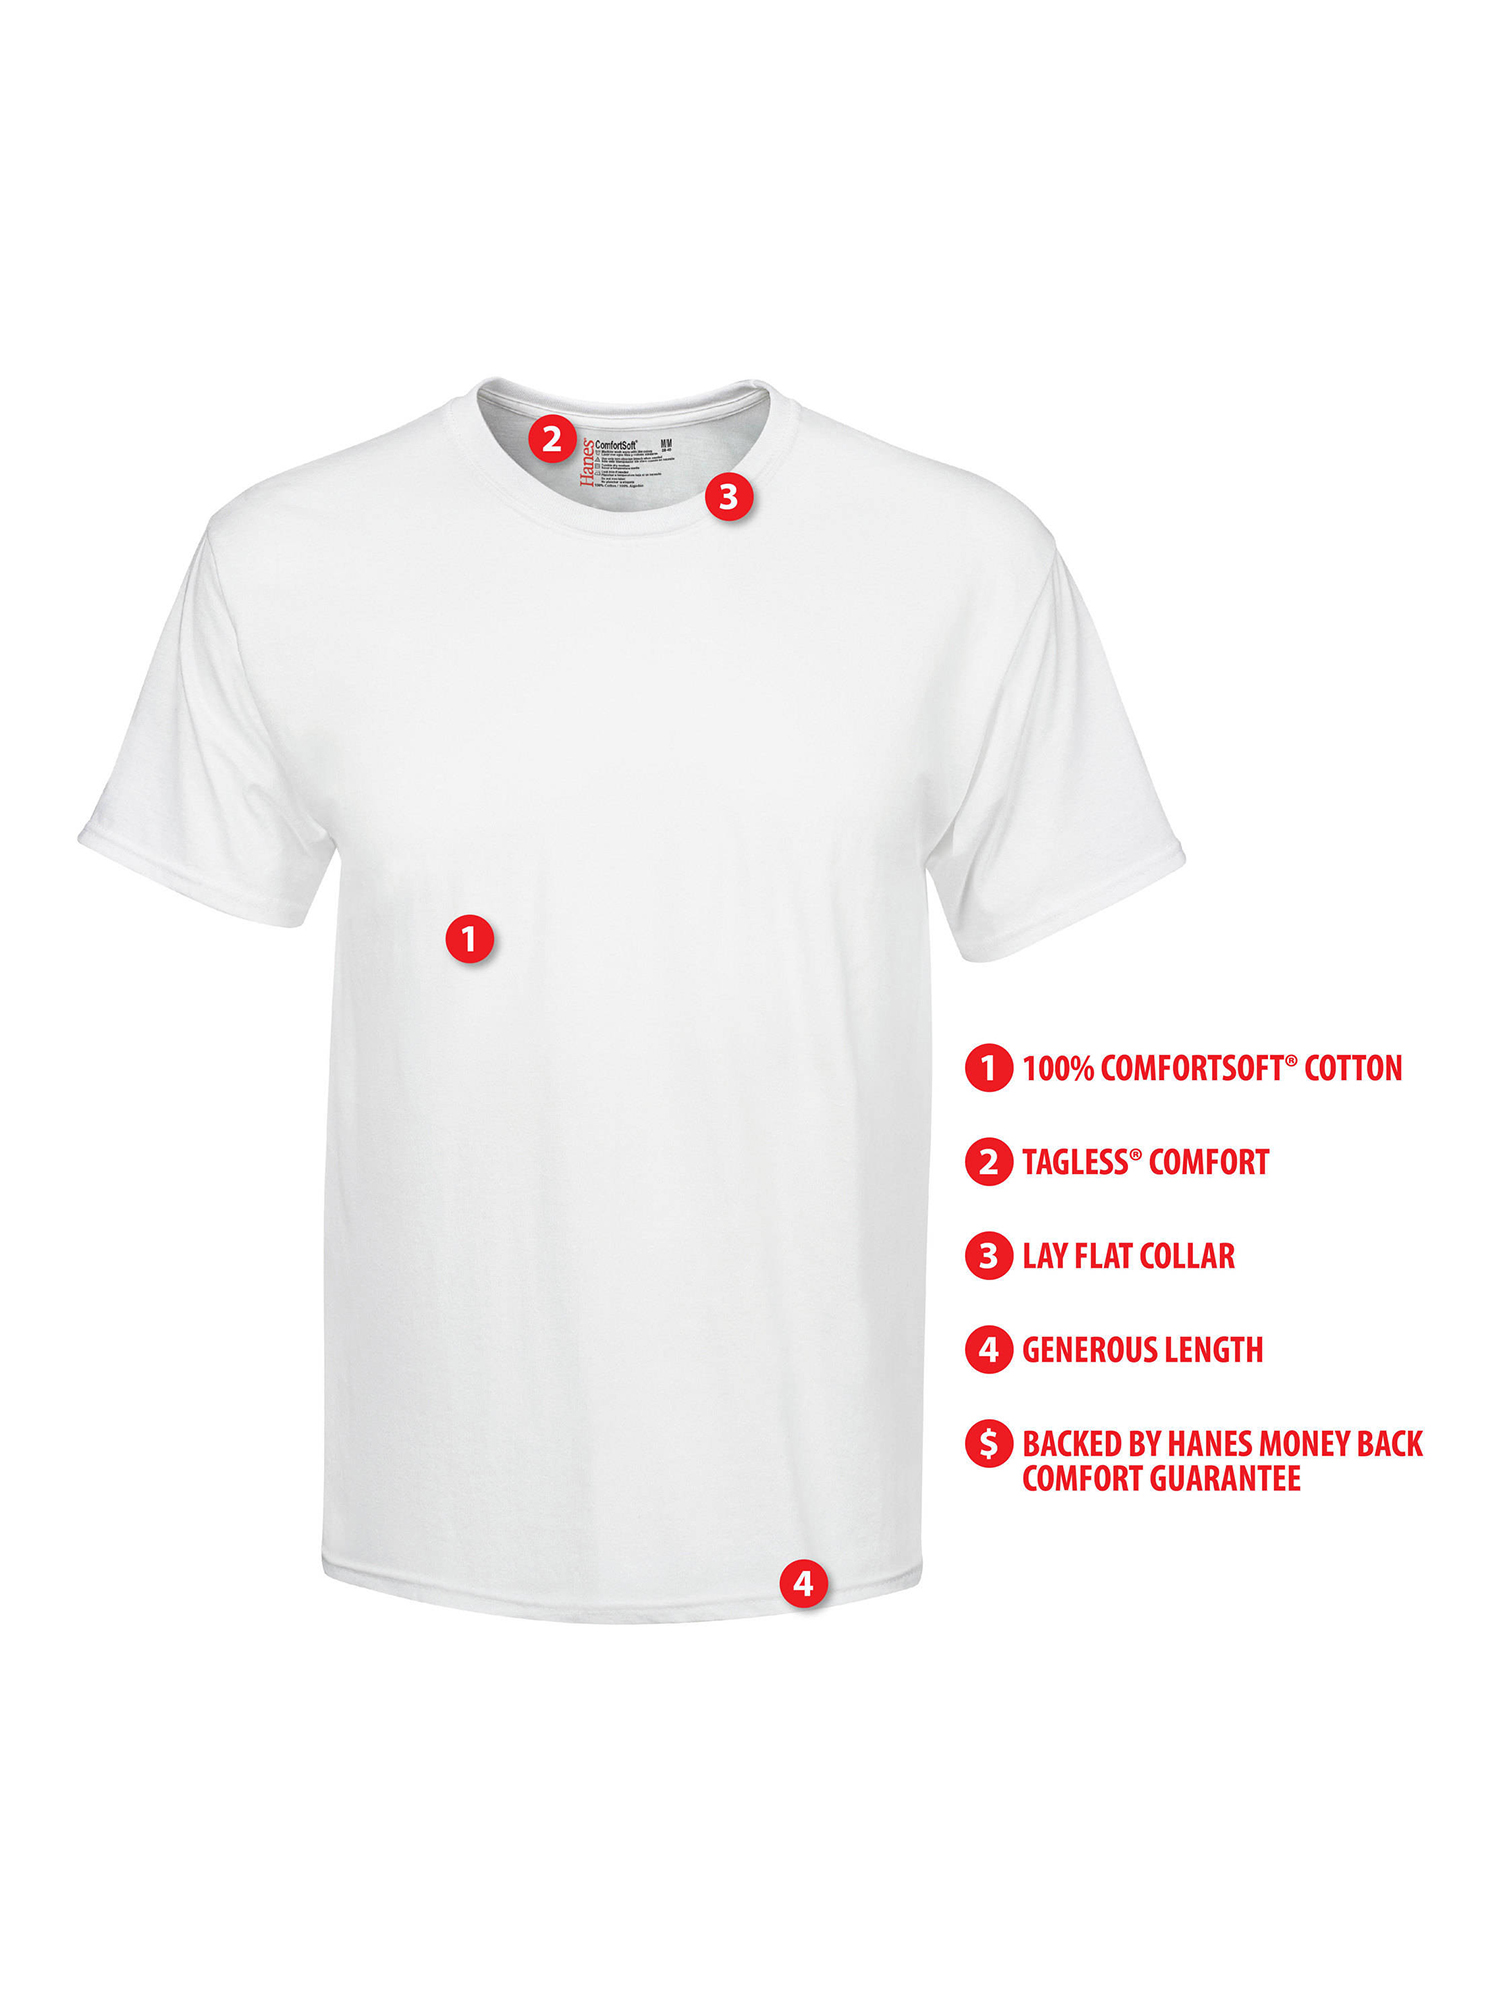 Hanes Men's Super Value Pack White Crew T-Shirt Undershirts, 10 Pack - image 5 of 6